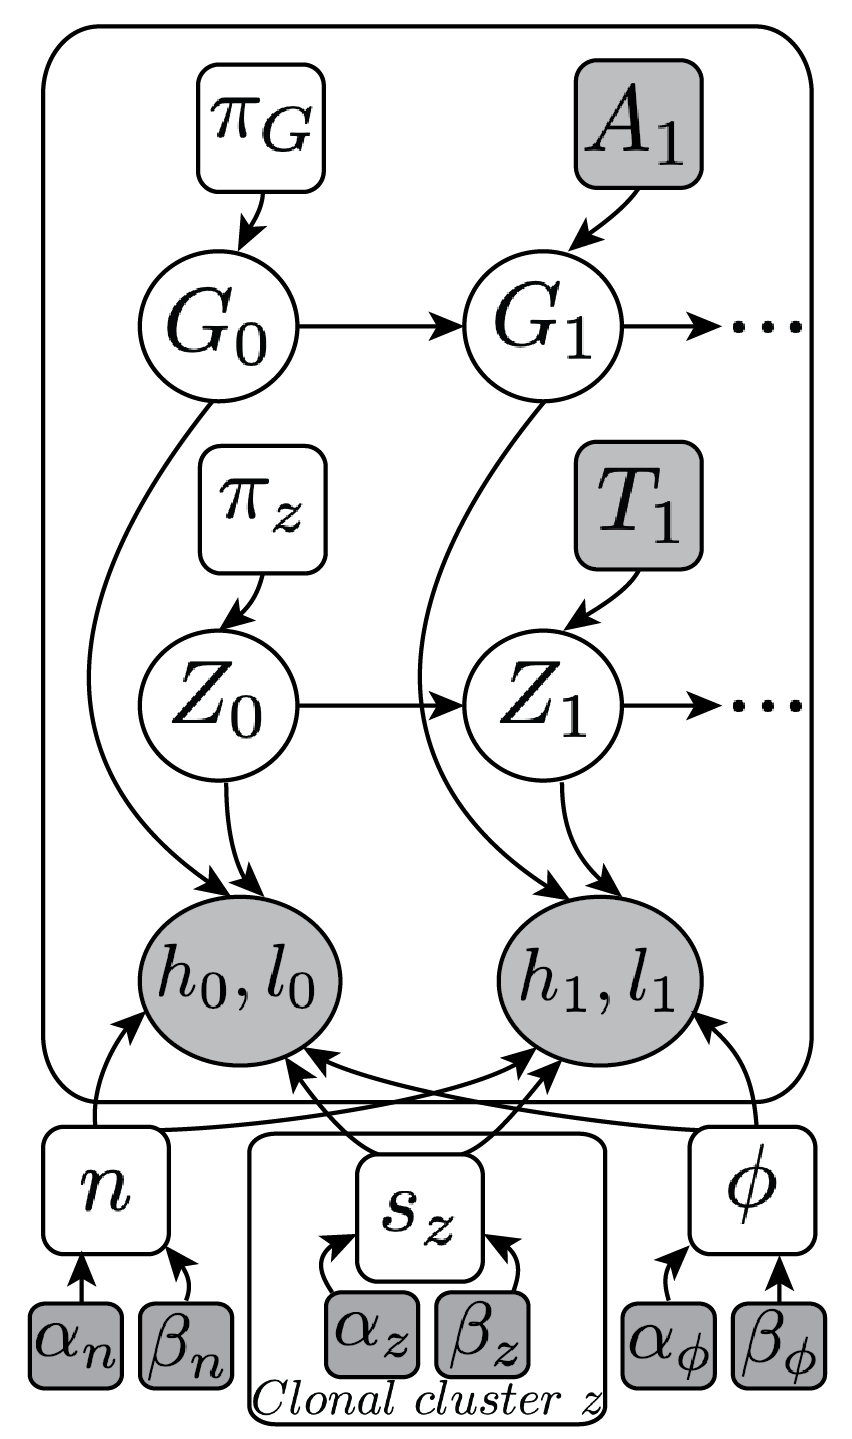 Probabilistic graphical model of TITAN